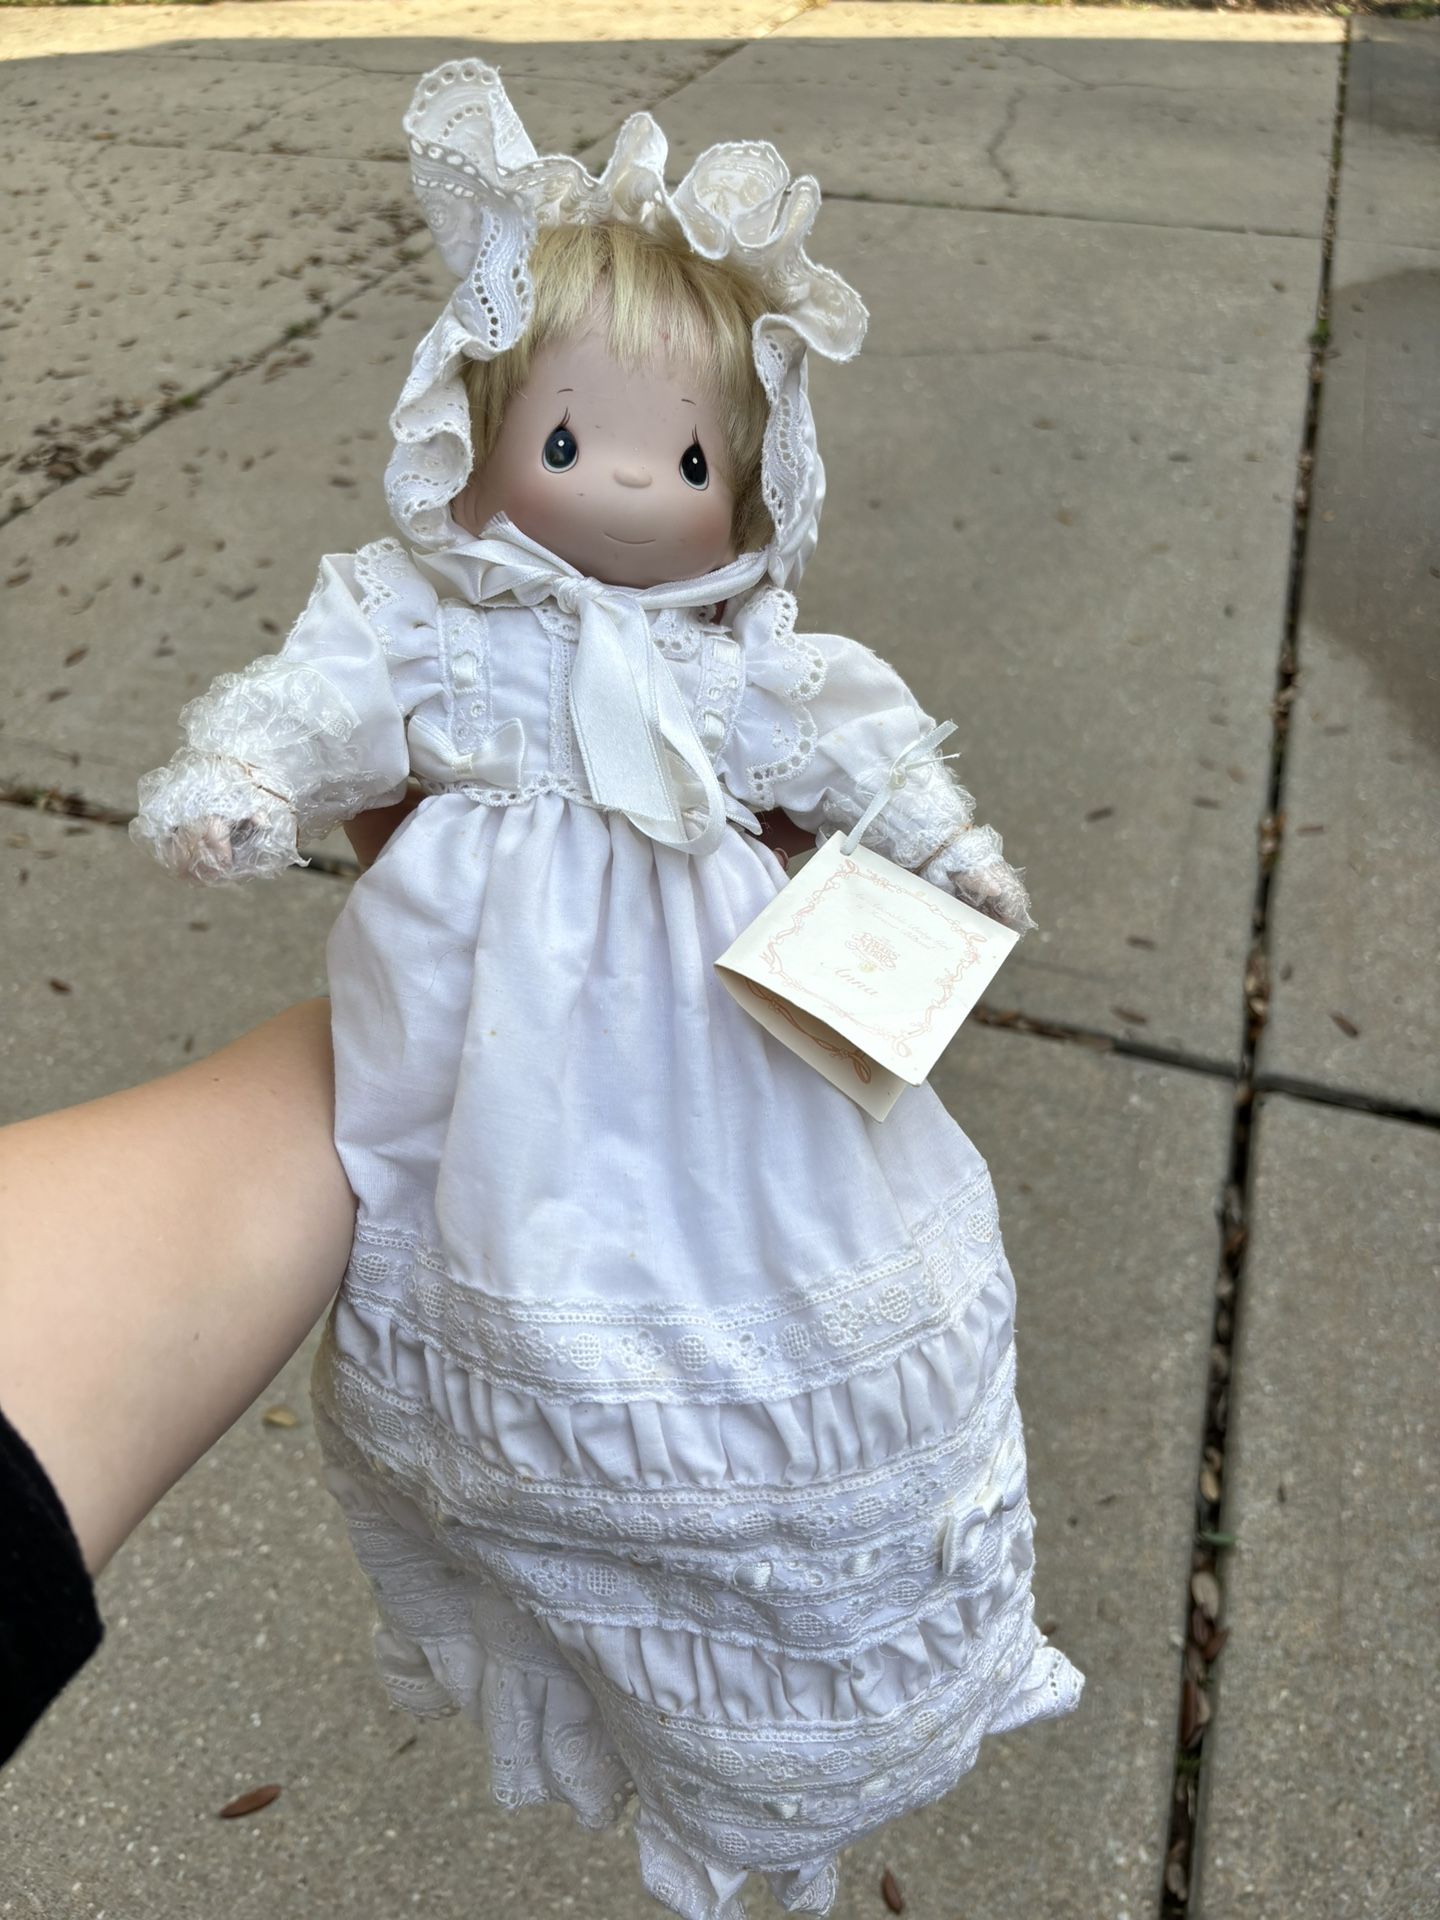 1995 Precious Moments Anna 13" doll by Hamilton Collection